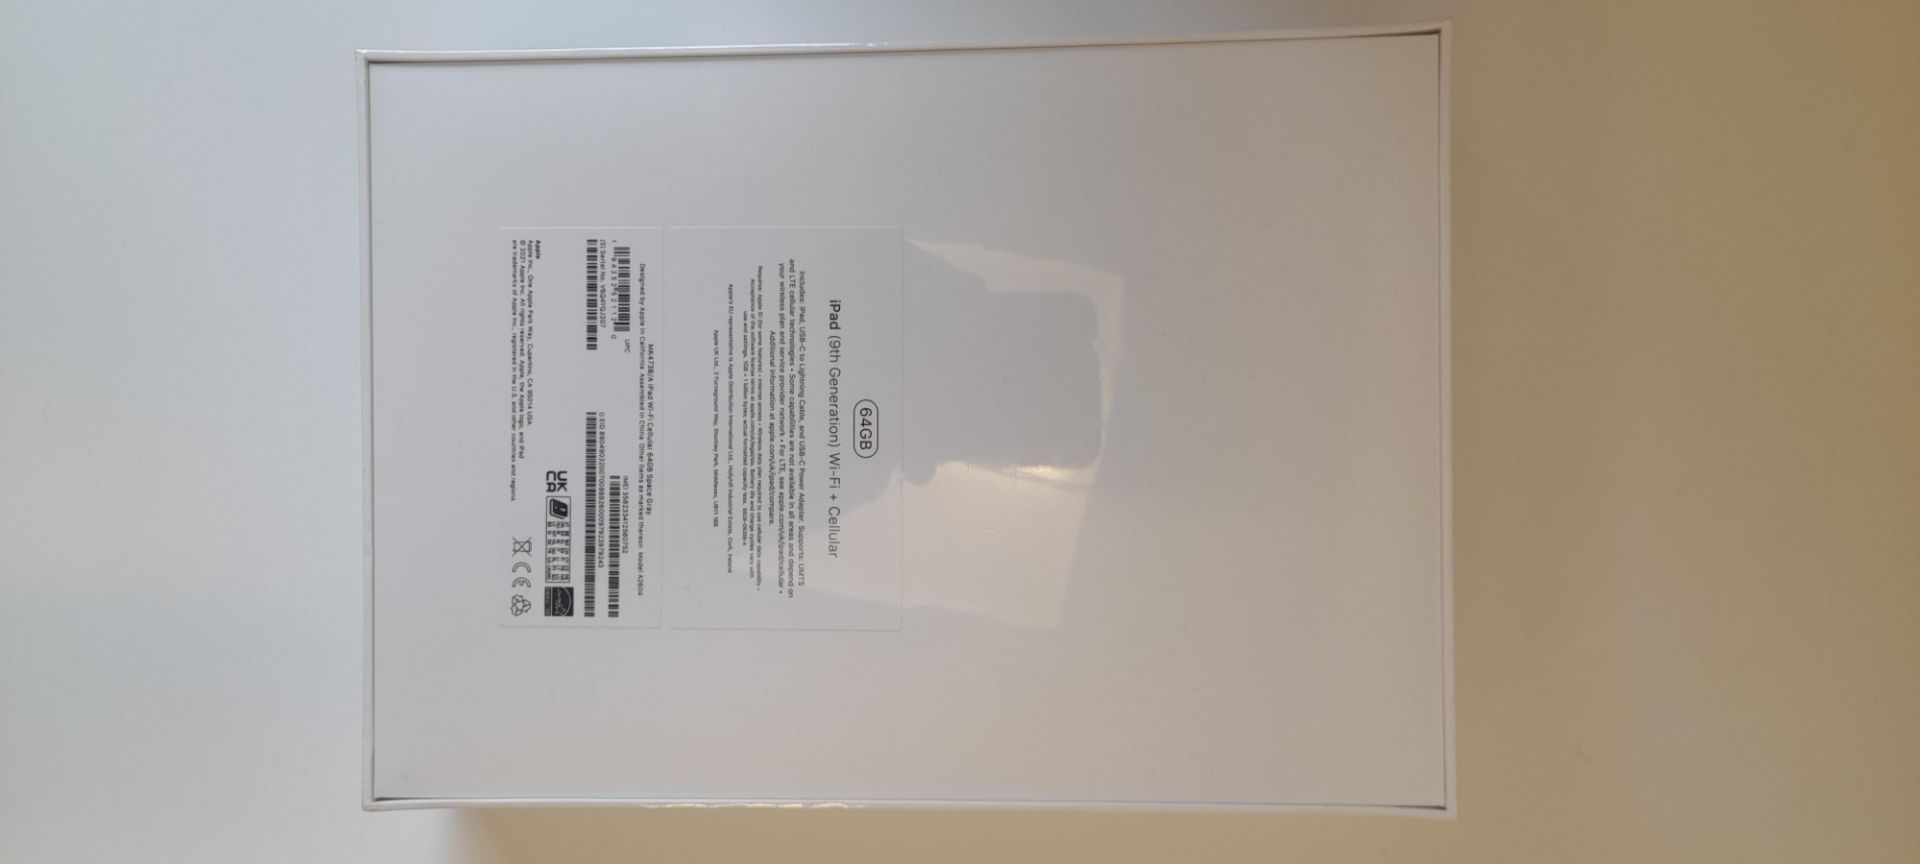 iPad (9th Generation) 64GB Space Gray Model A2604, S/N: V6Q4YQJ2G7. Sealed box - Image 2 of 2